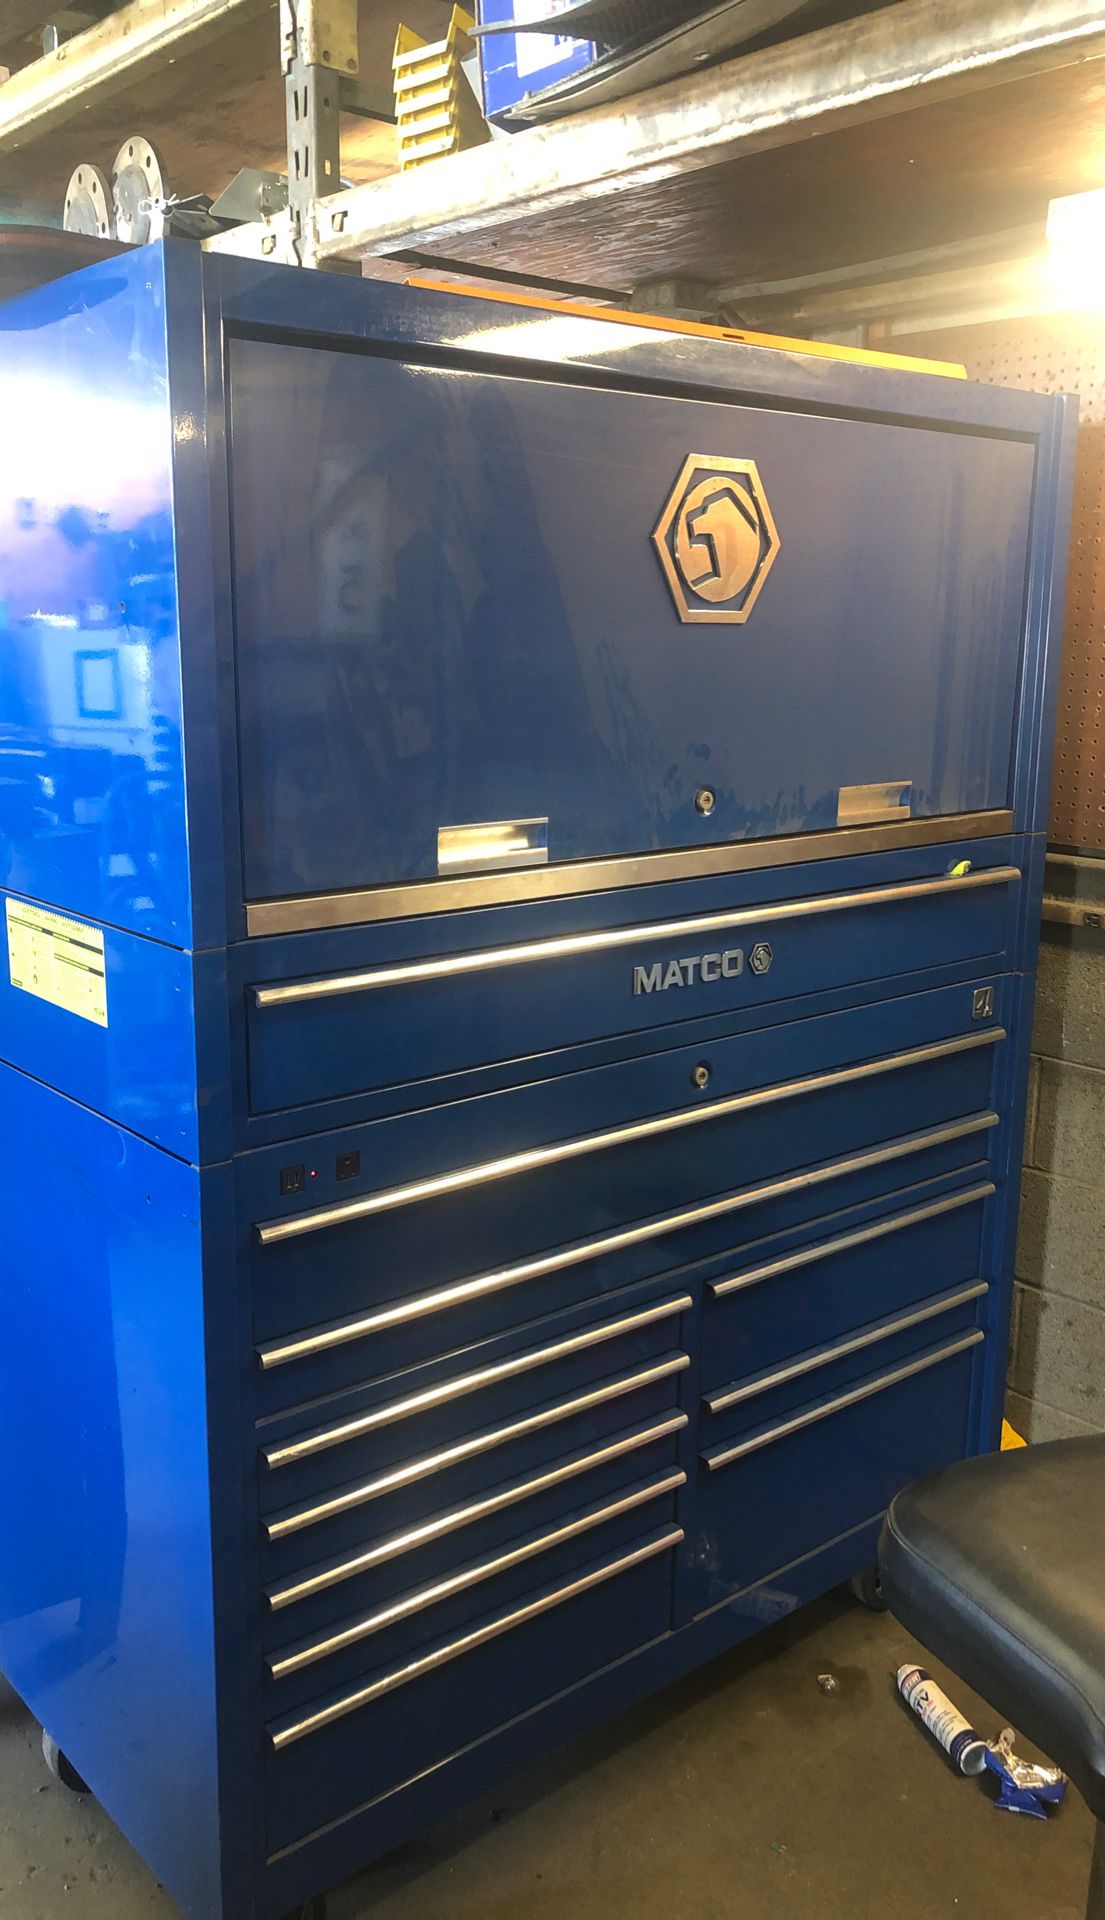 Matco 4s tool box